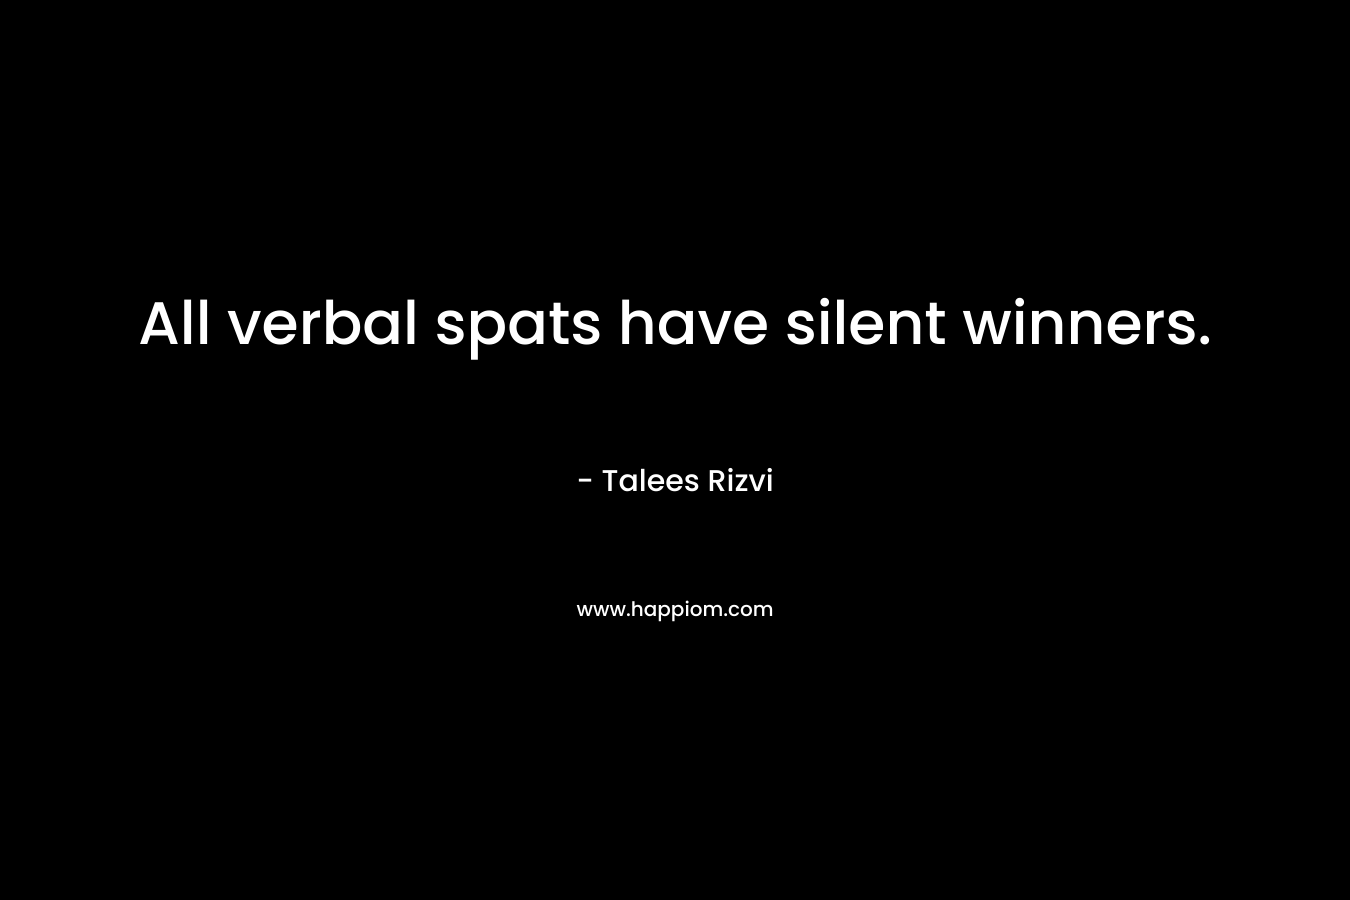 All verbal spats have silent winners. – Talees Rizvi